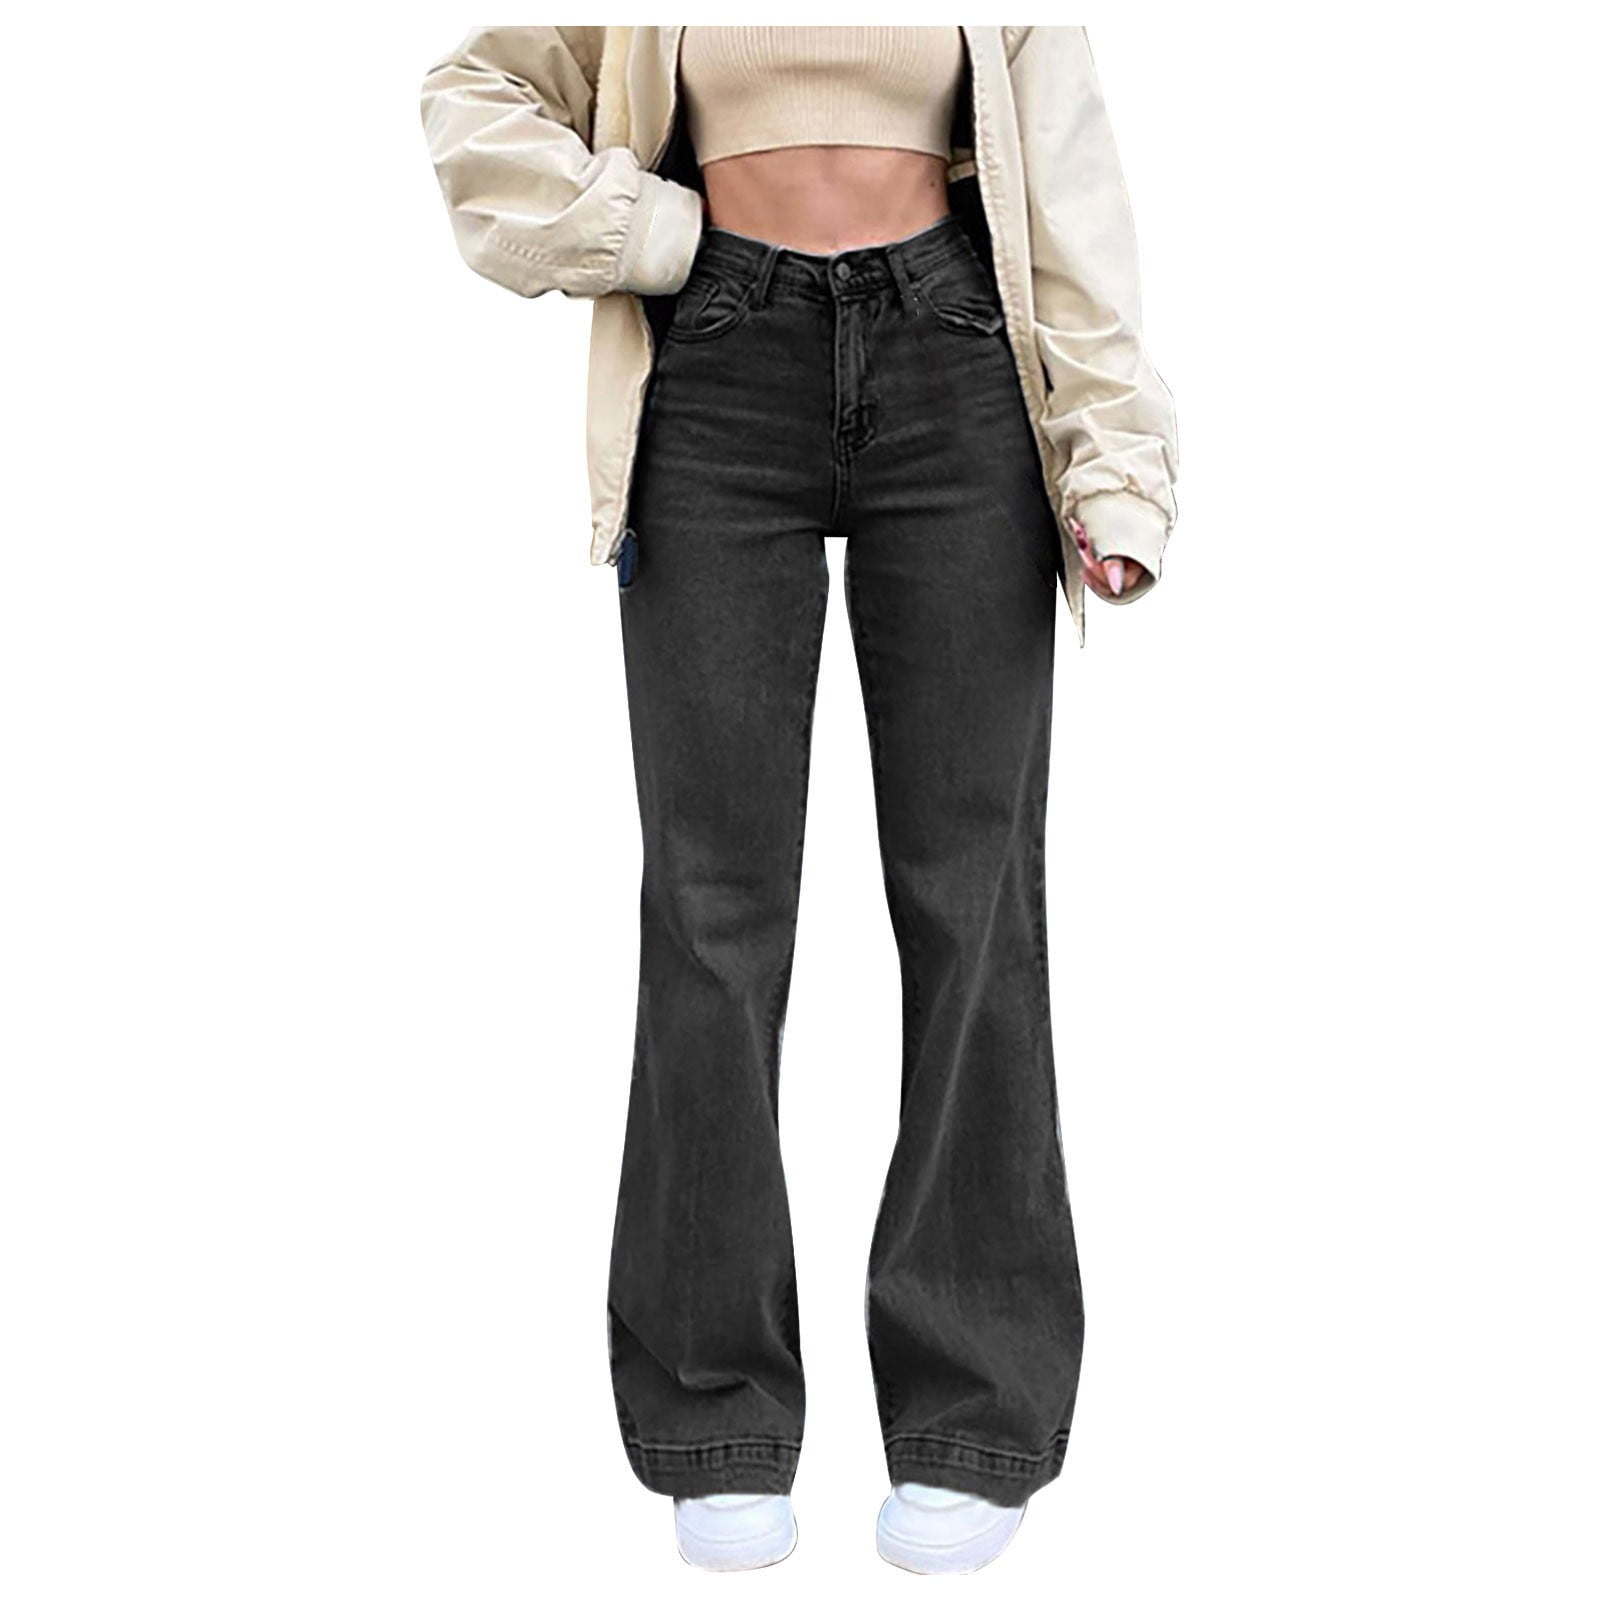 QXXKJDS Fashion Women S Jeans Street Style Sexy Frayed Flared